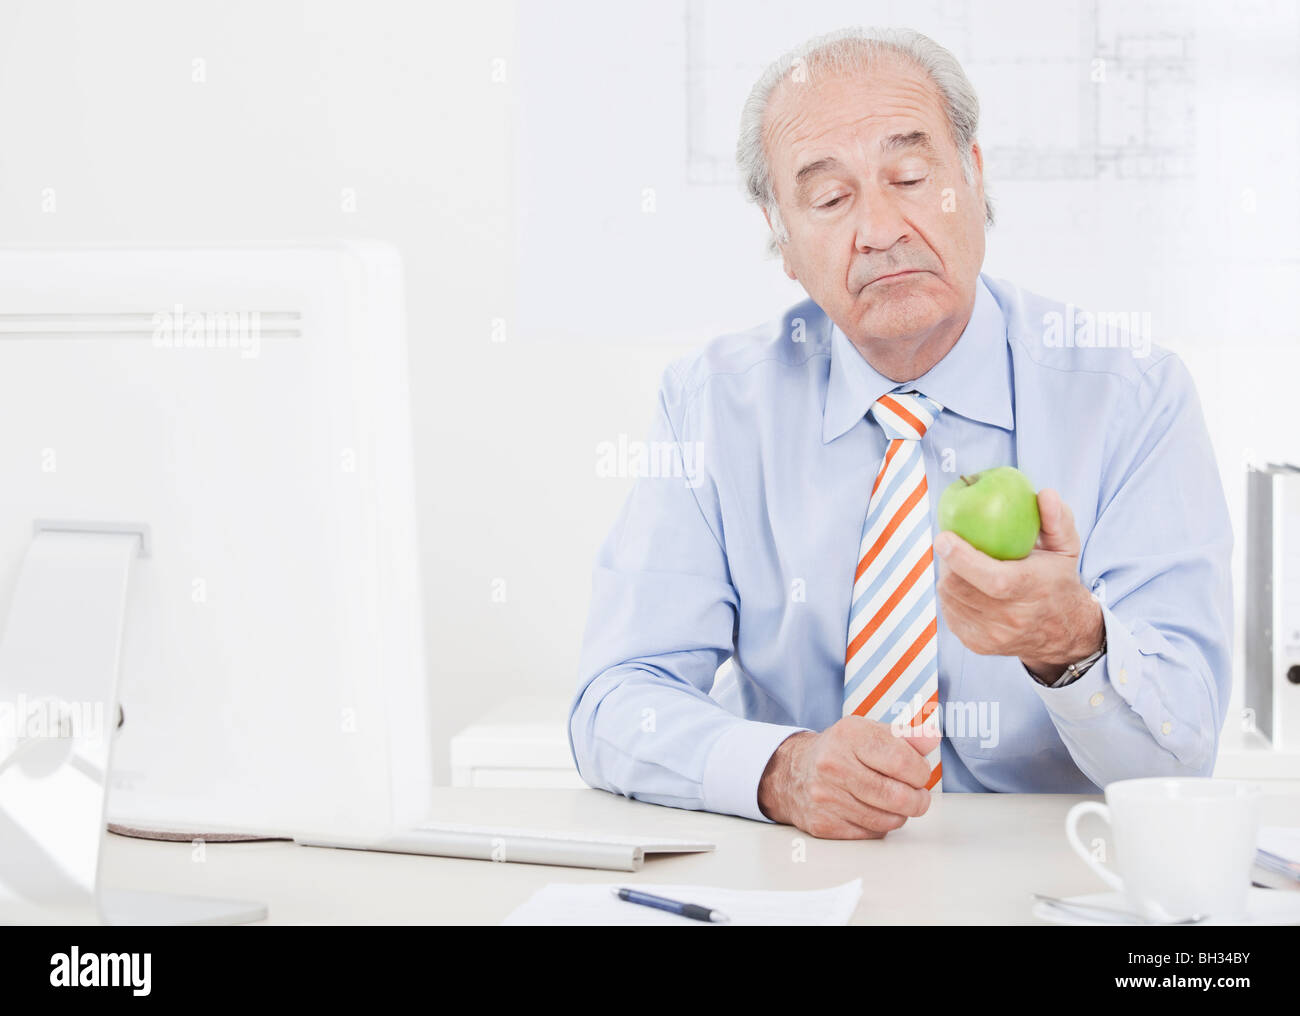 Man looking doubtfully at an apple Stock Photo